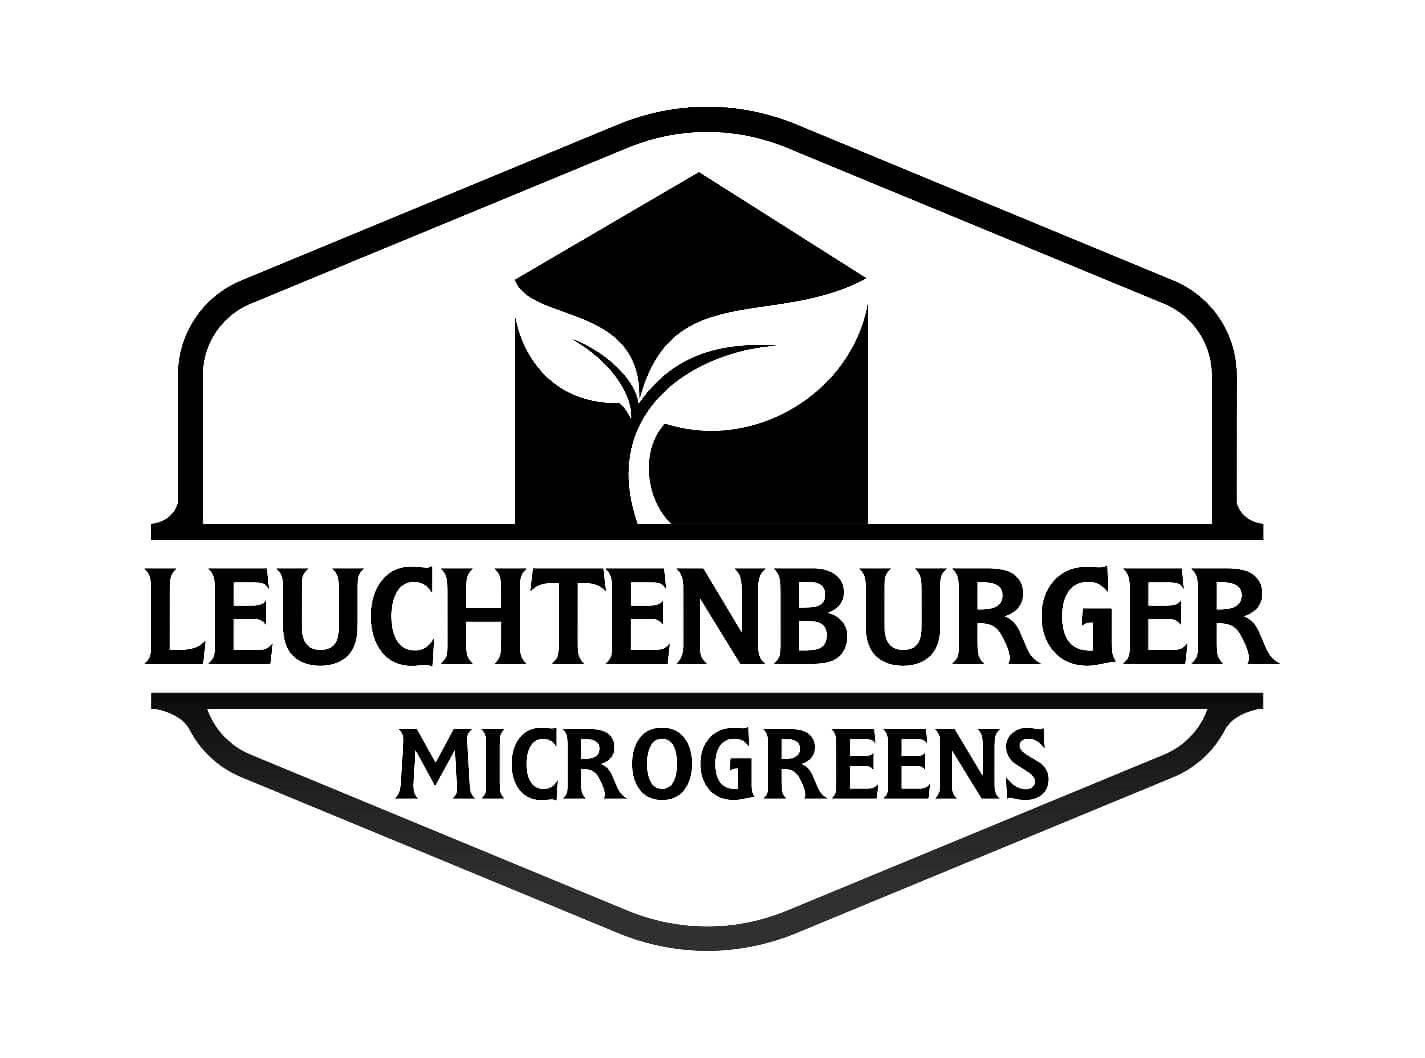 Leuchtenburger Microgreens